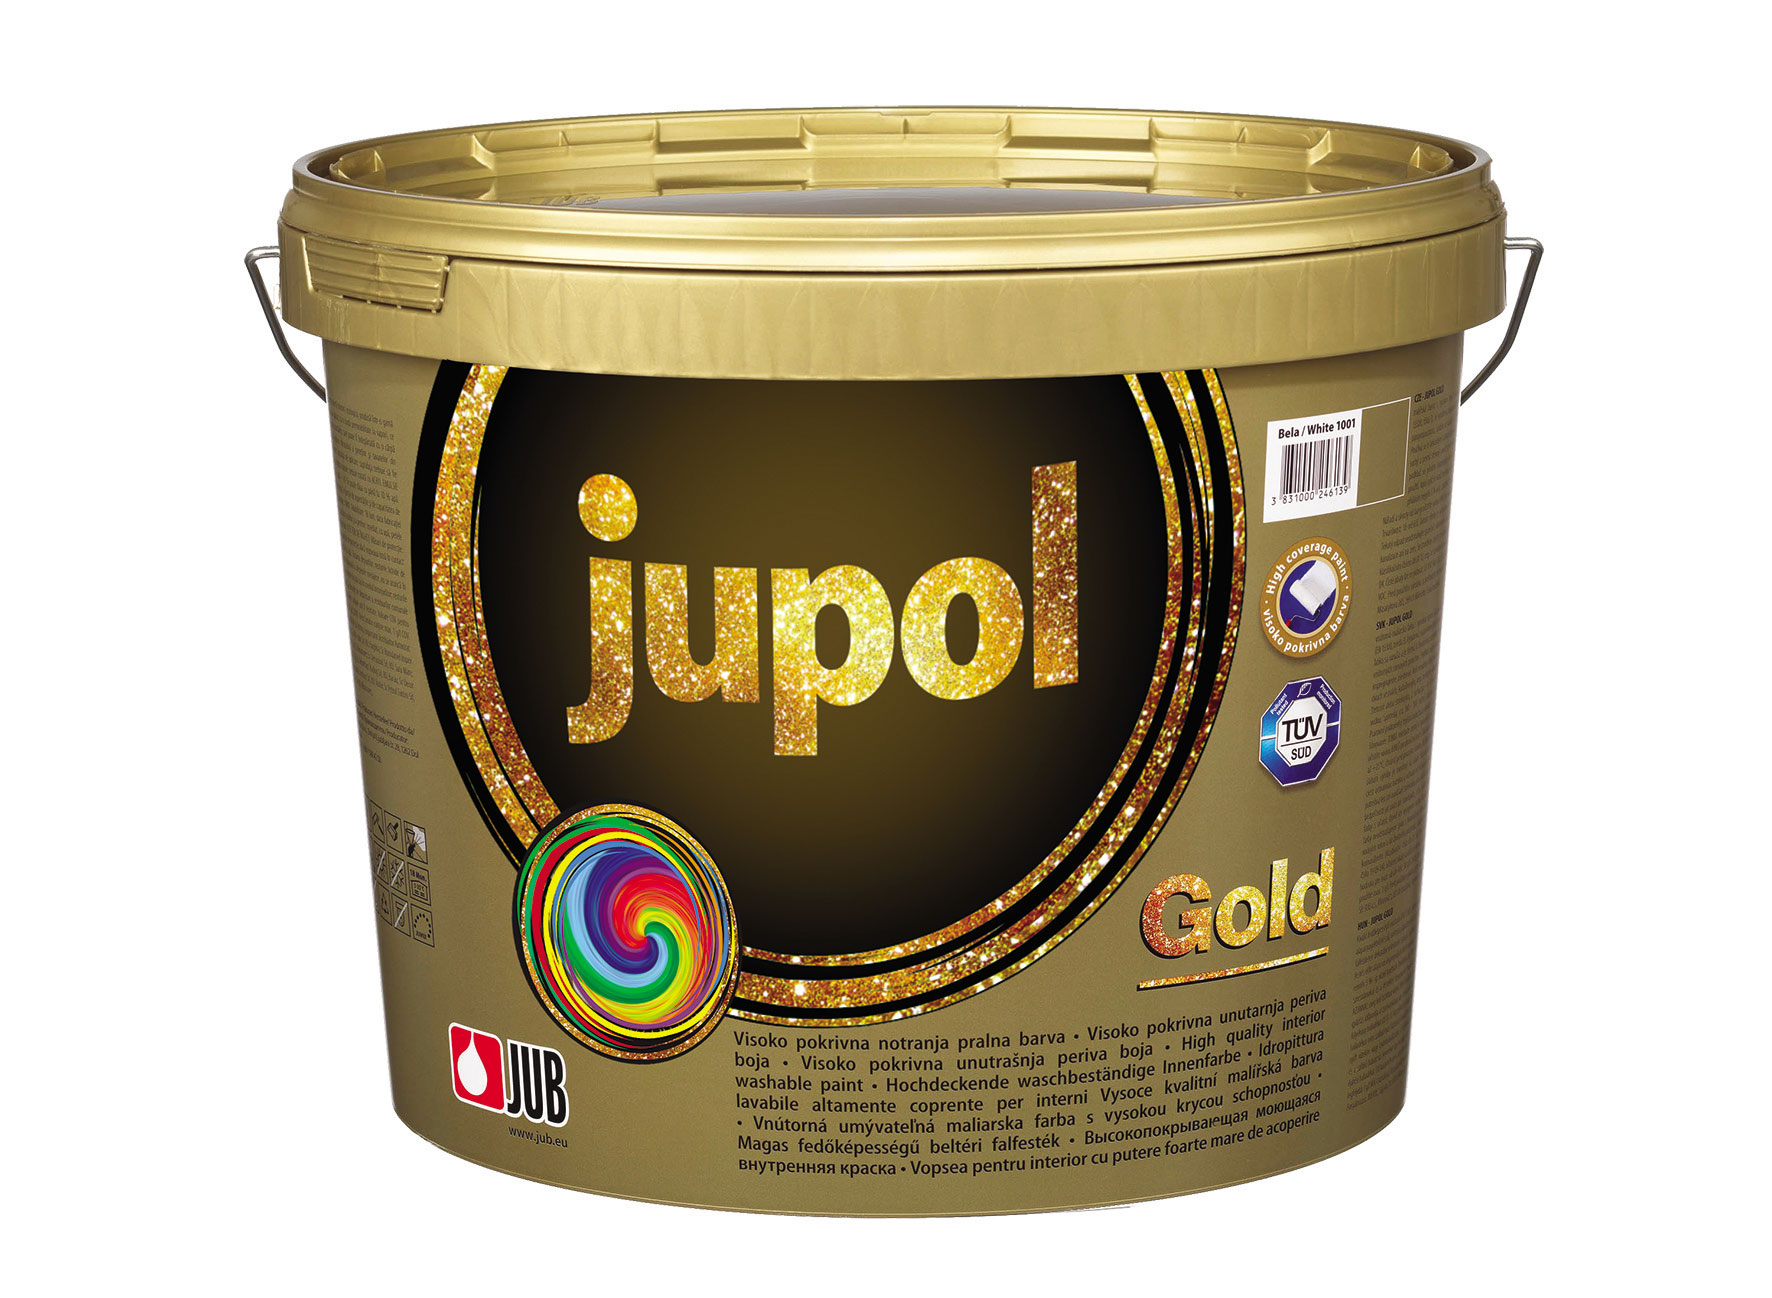 JUPOL Gold